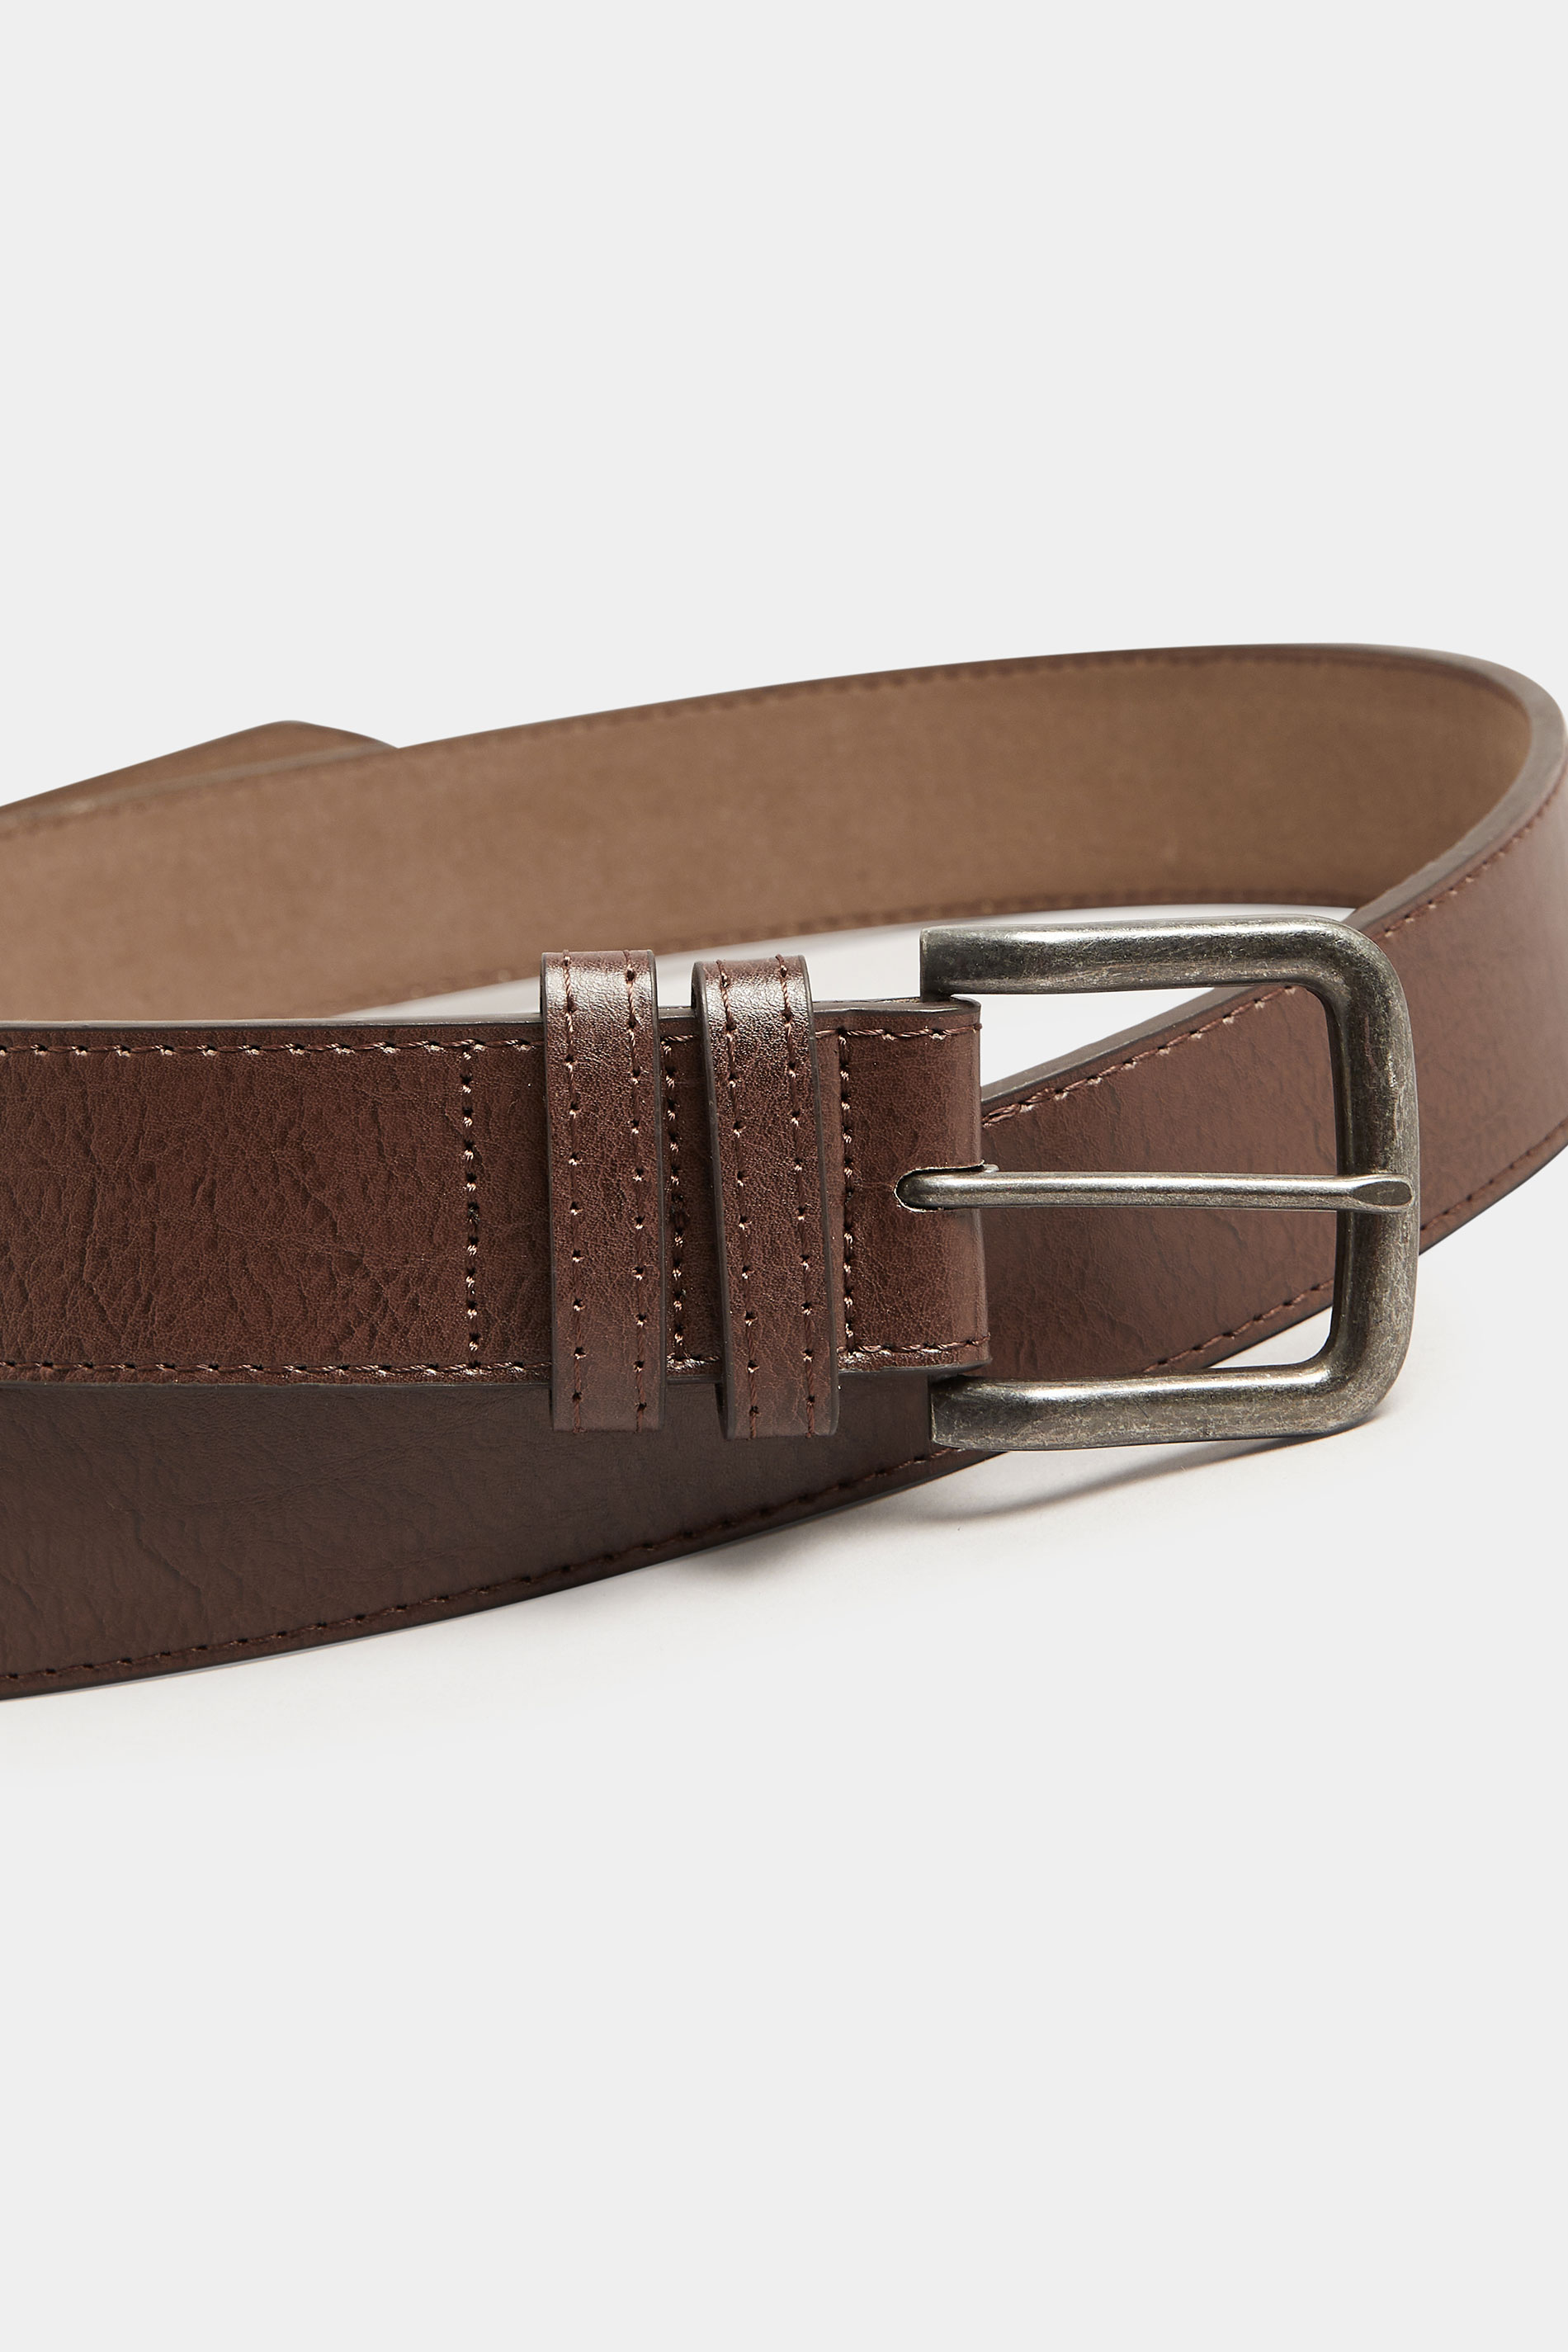 D555 Brown & Silver Bonded Leather Belt | D555 3